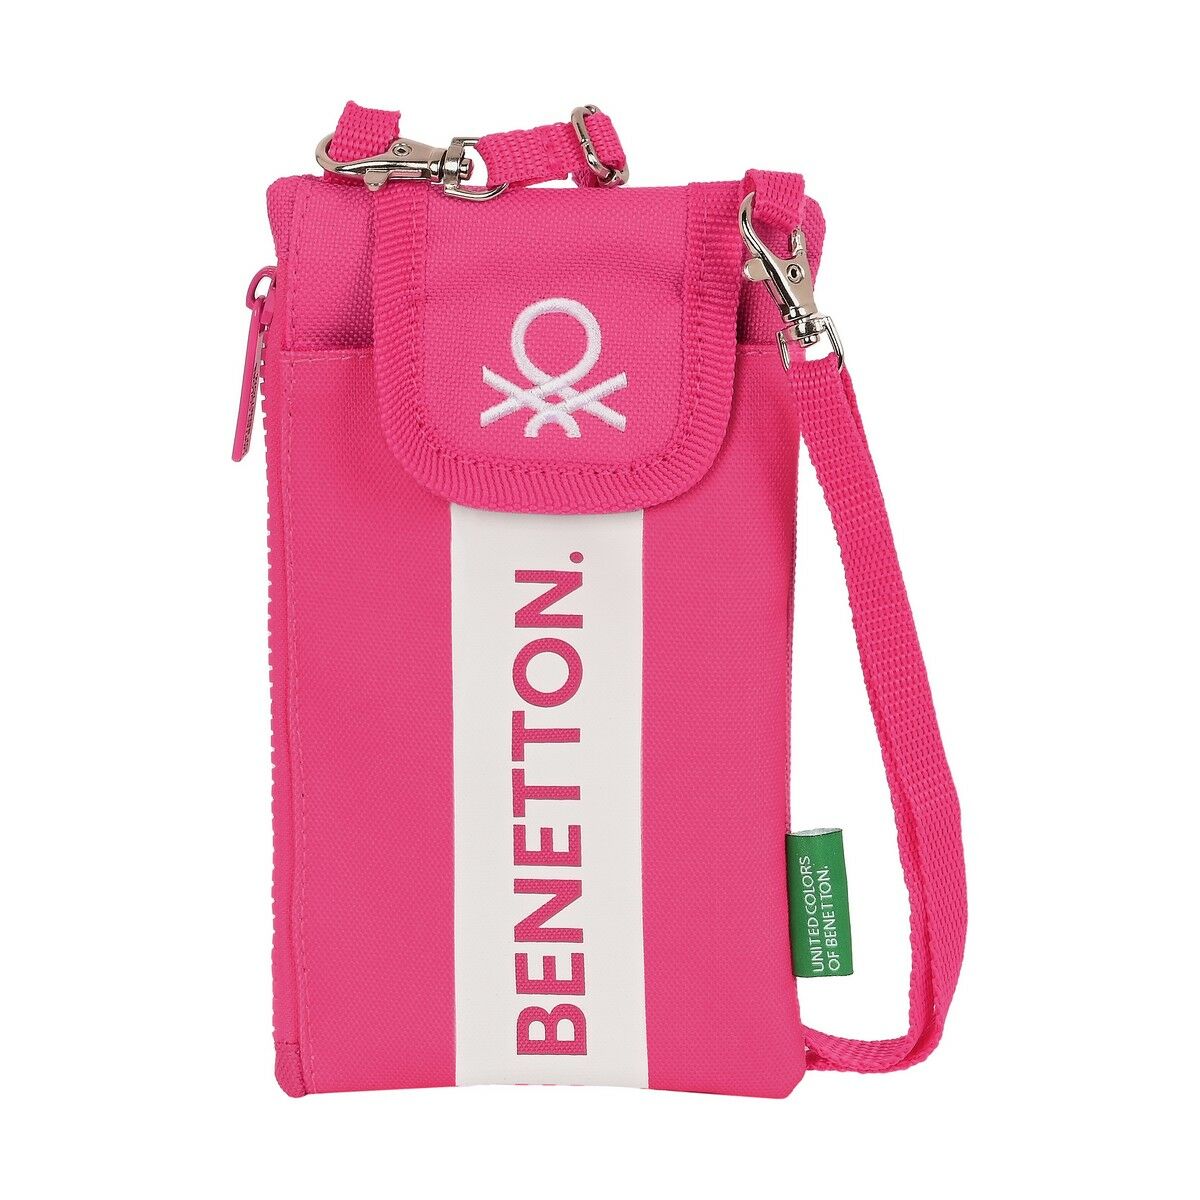 Porte-monnaie Benetton Raspberry Protection pour téléphone portable Fuchsia